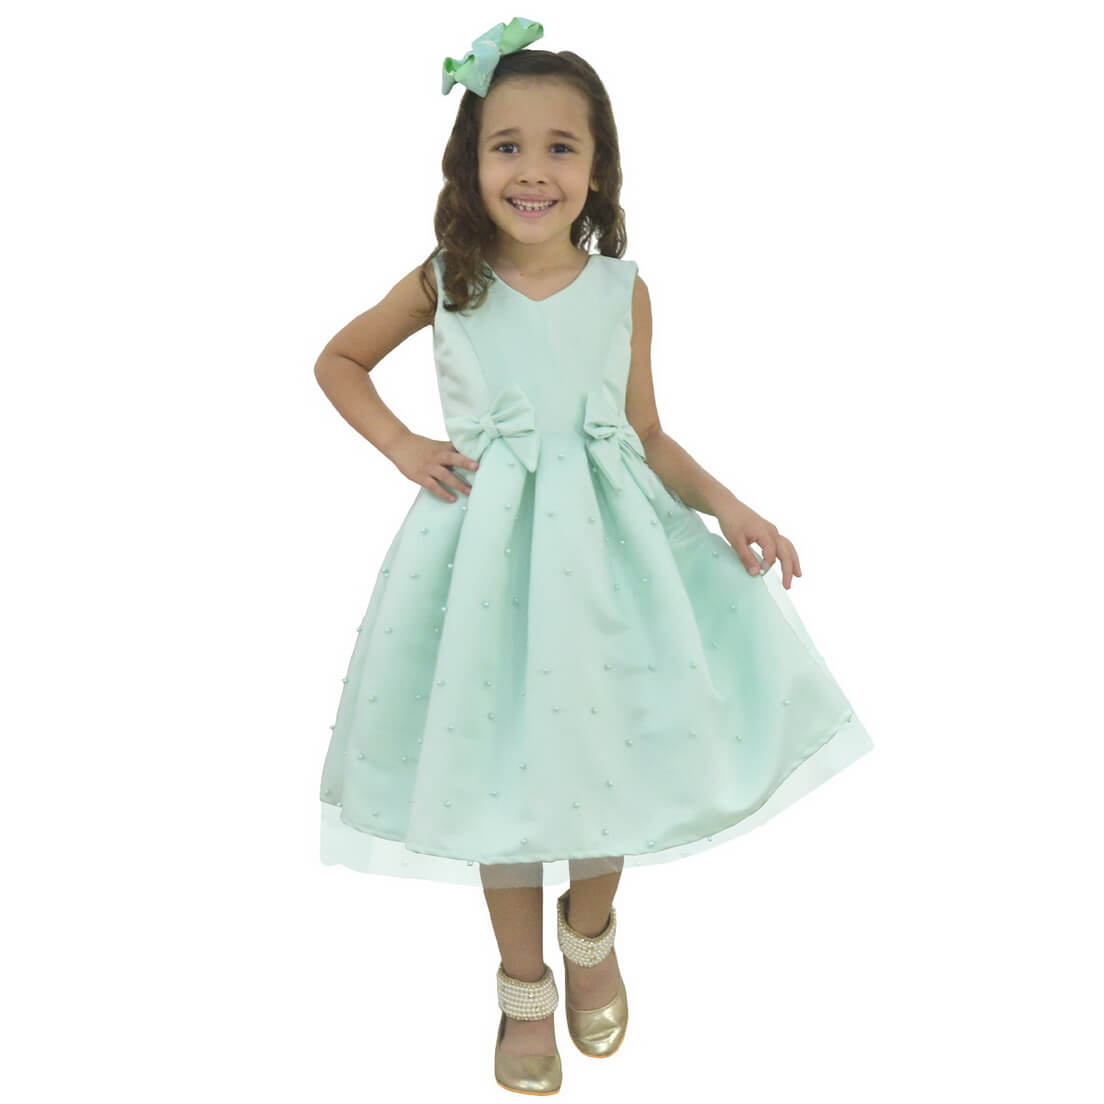 Vestido Verde Tiffany infantil Saia Tule com Pérolas, Formatura